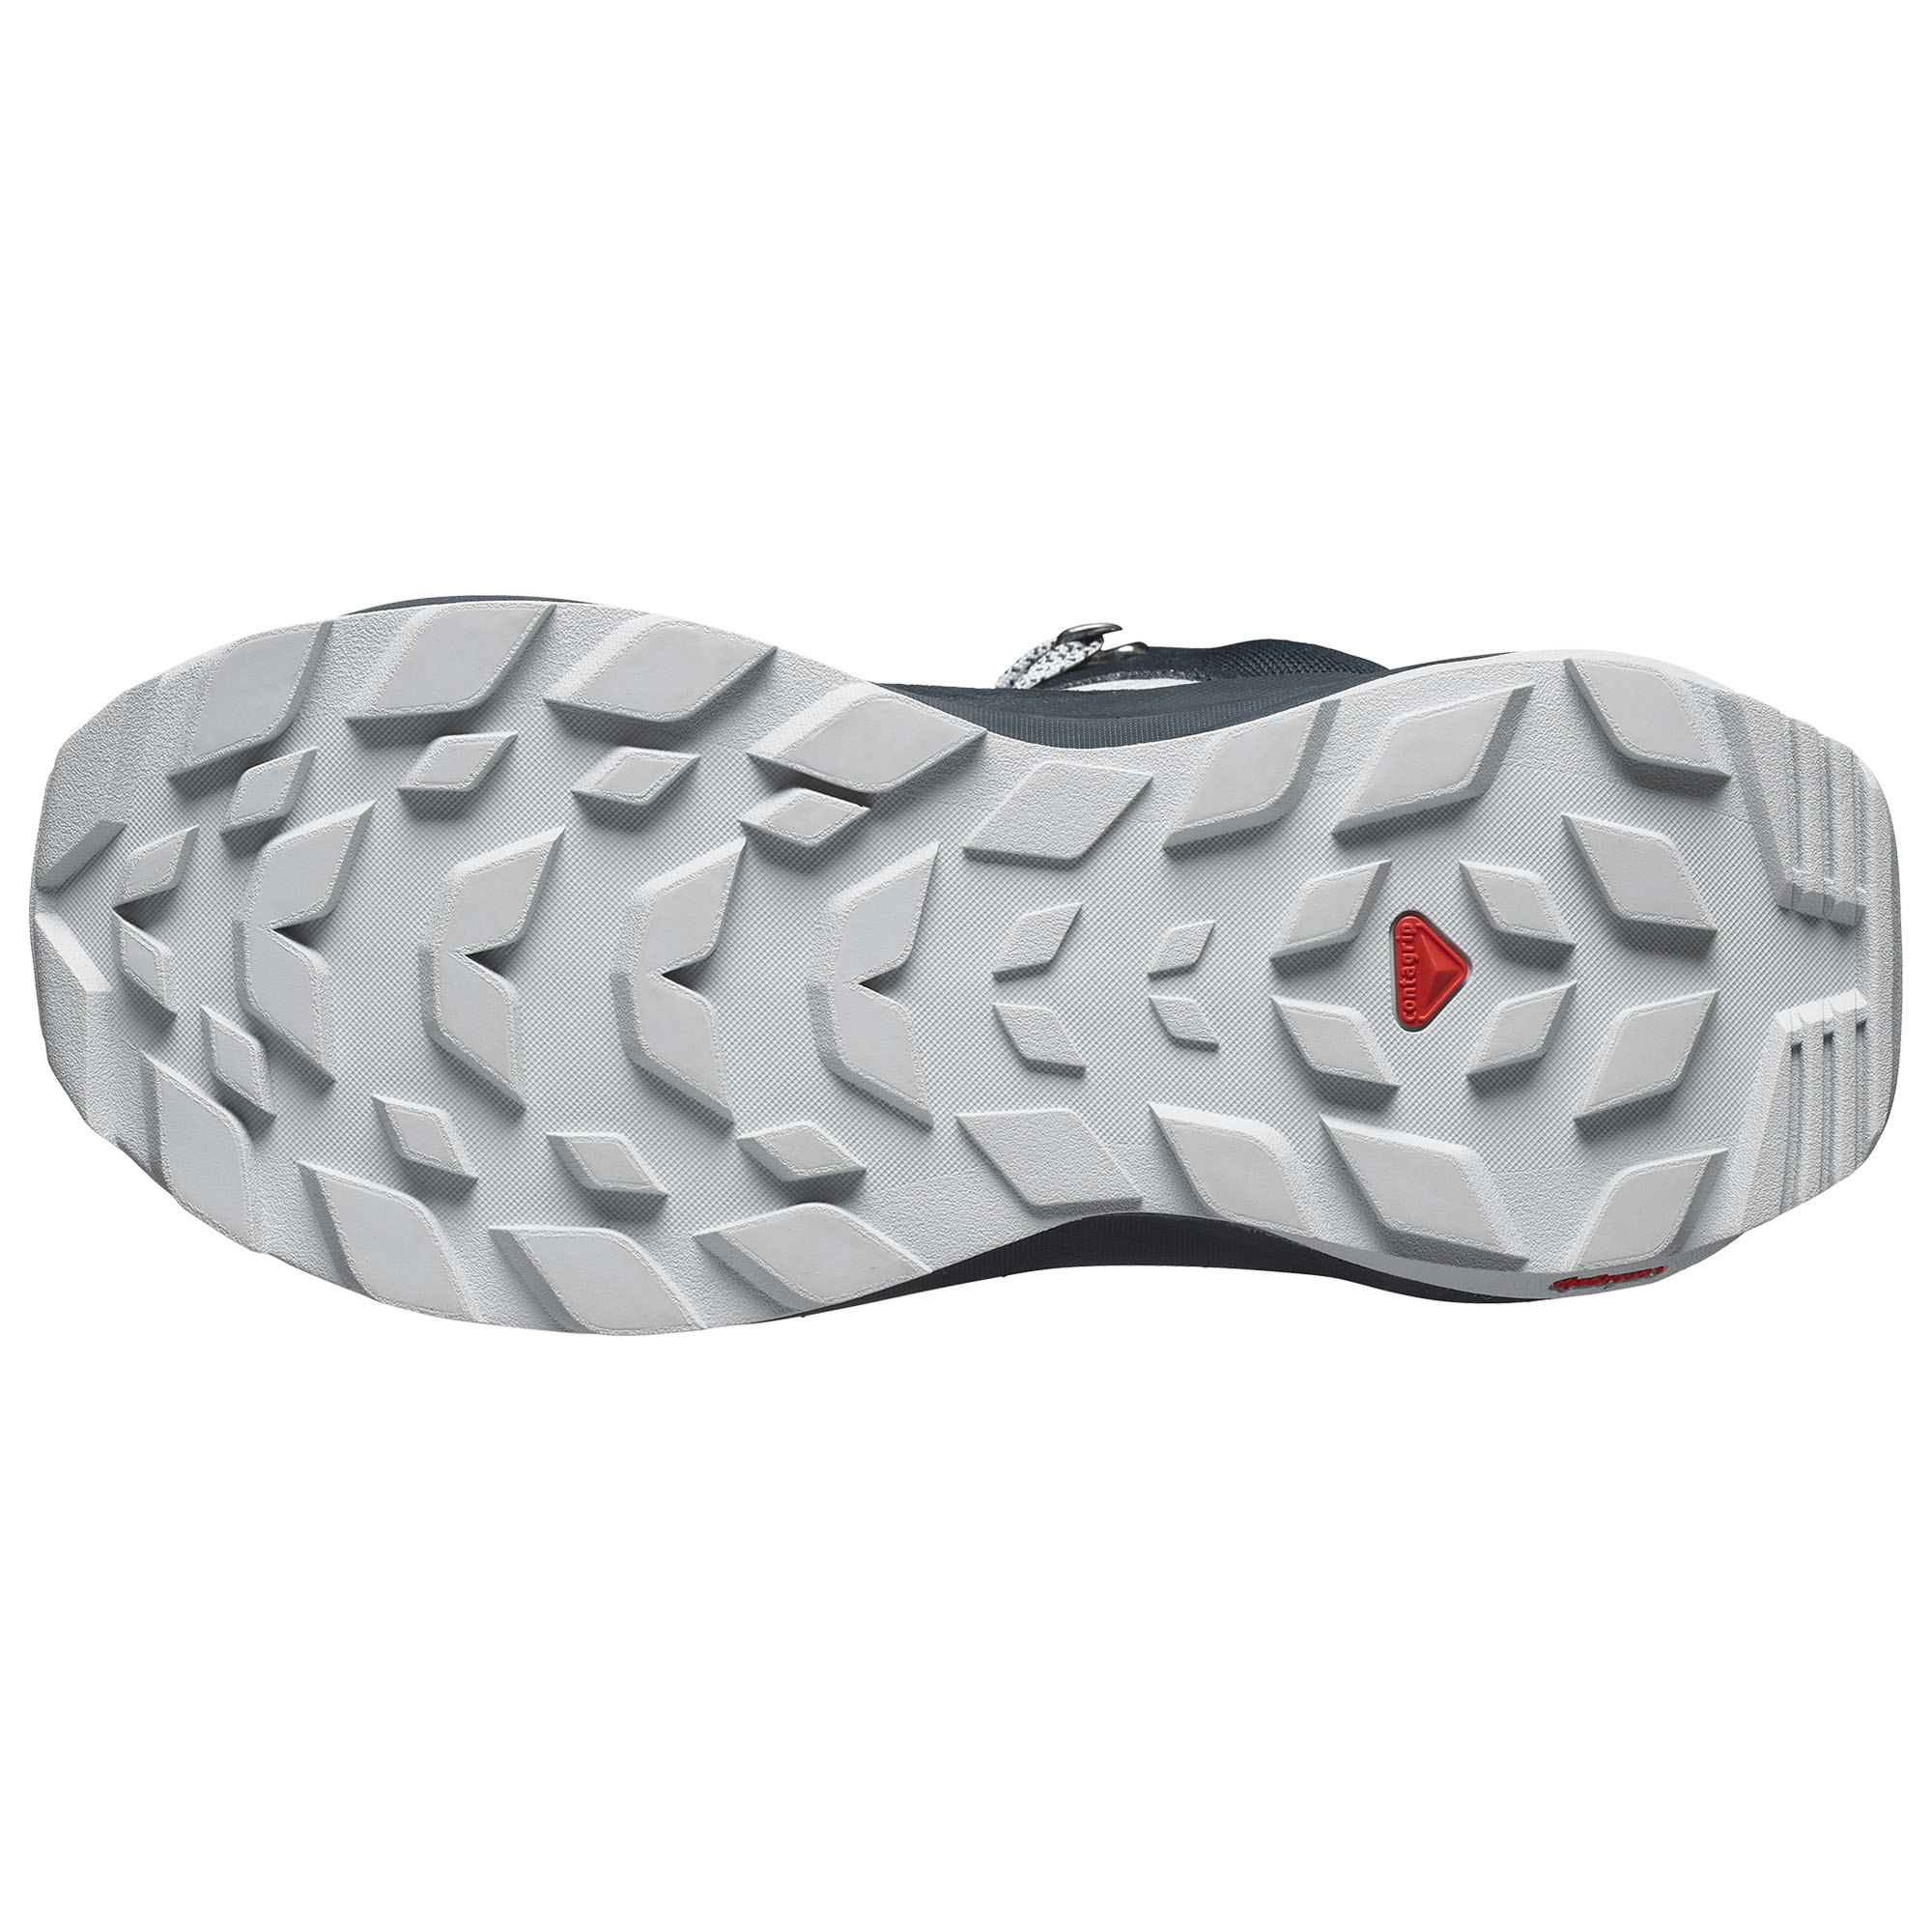 Salomon Women's Elixir GORE-TEX Hiking Shoes Gray 7